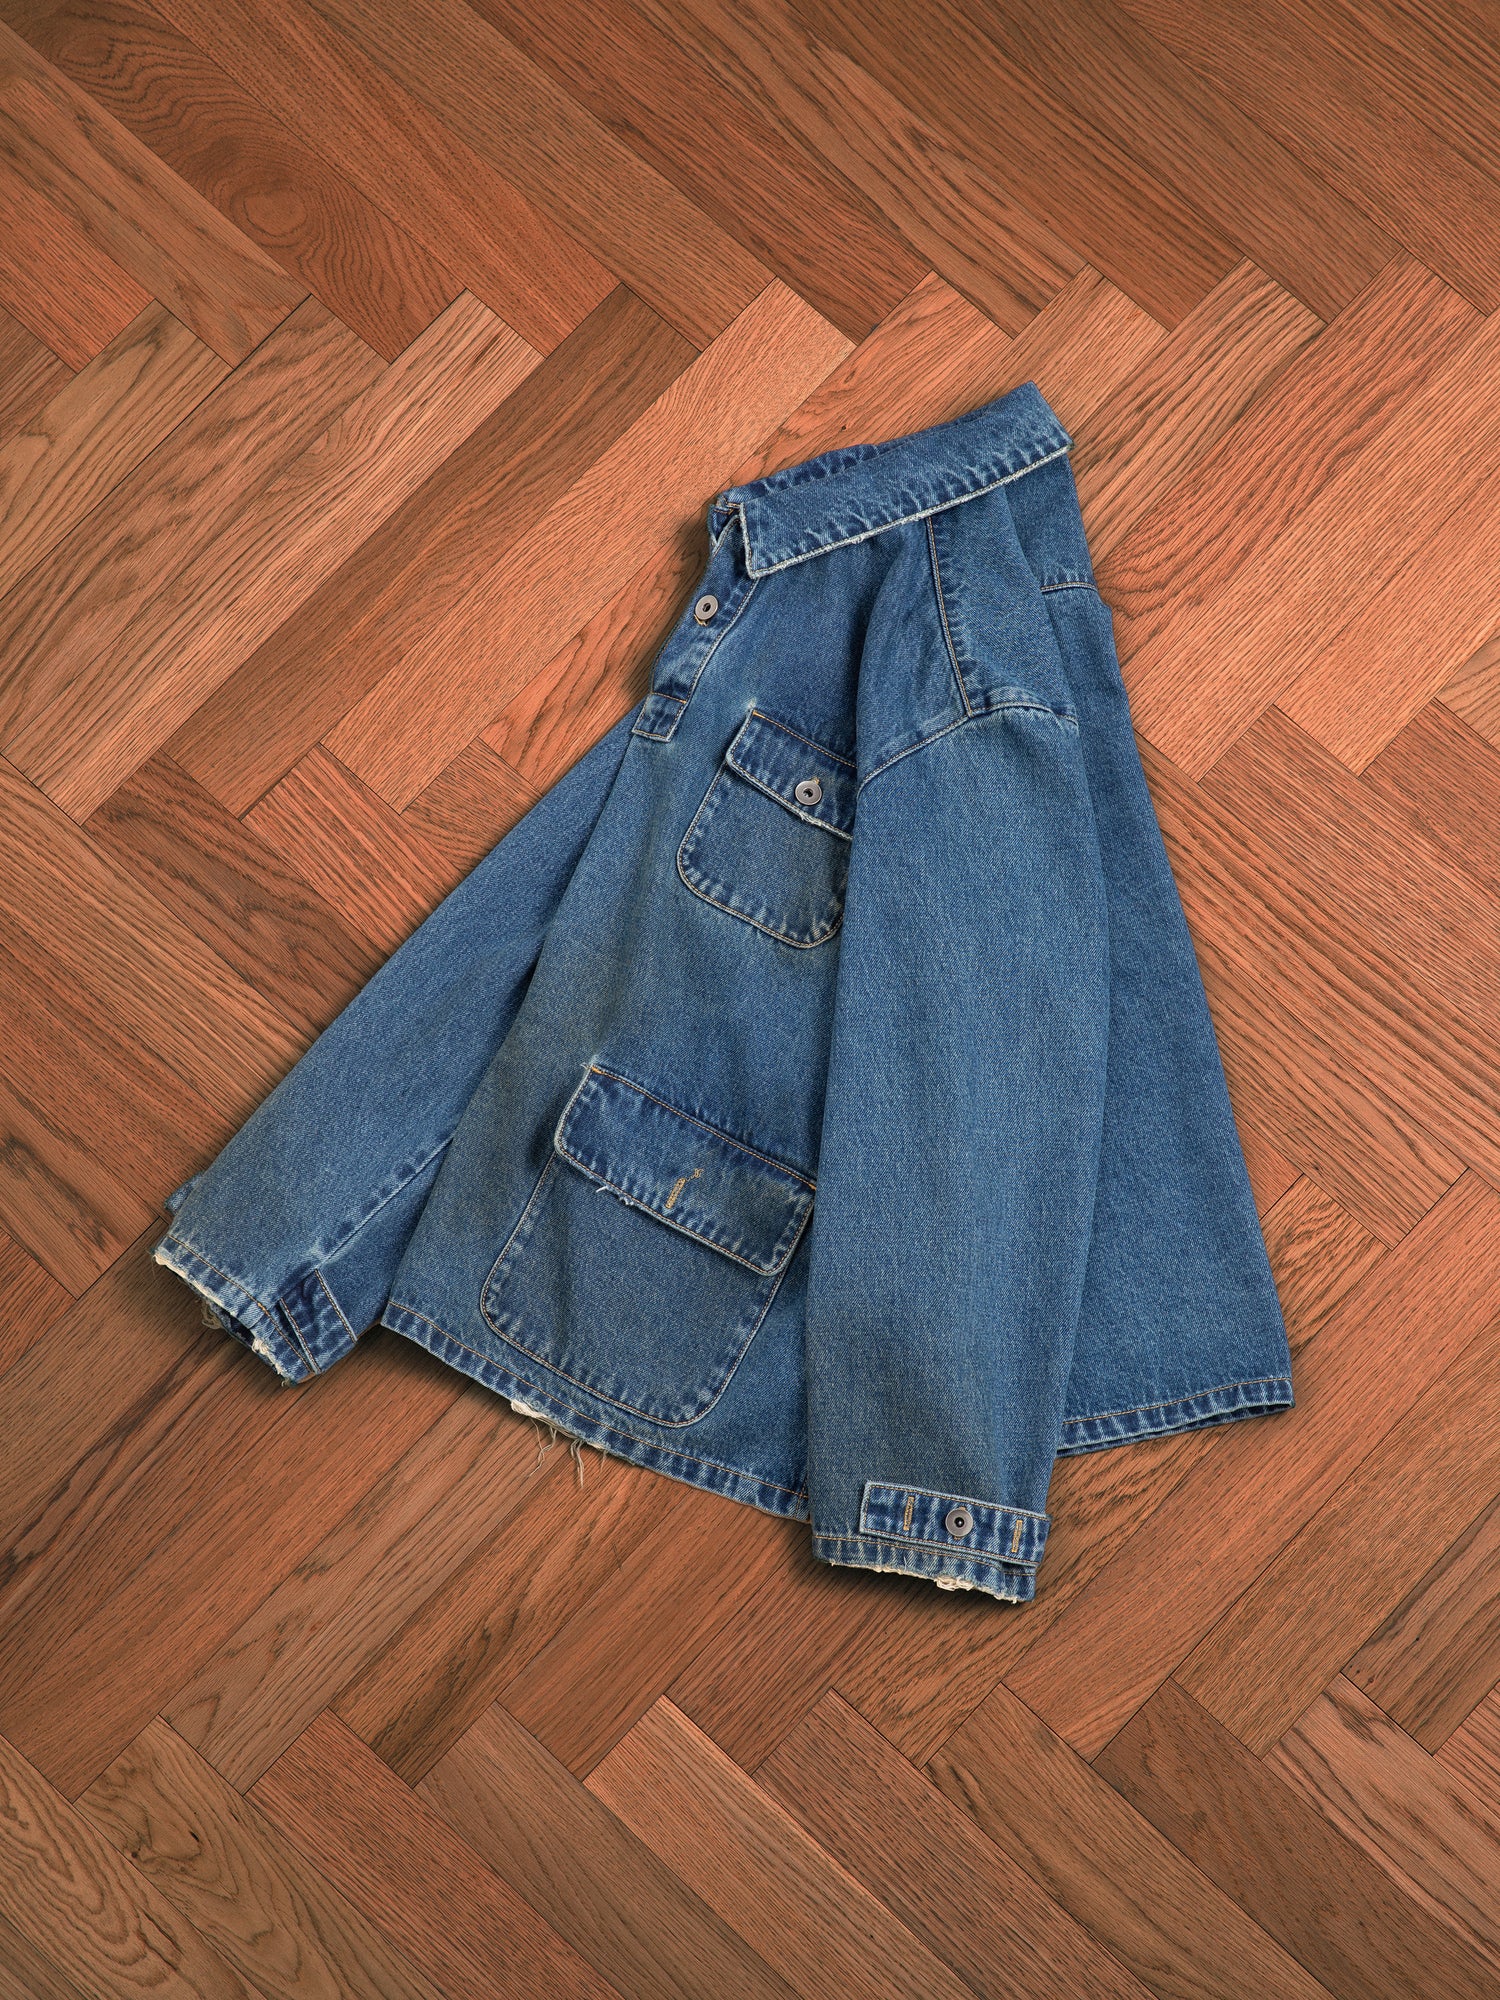 A Found blue denim jacket made from premium denim fabric, lying flat on a herringbone-patterned wooden floor.